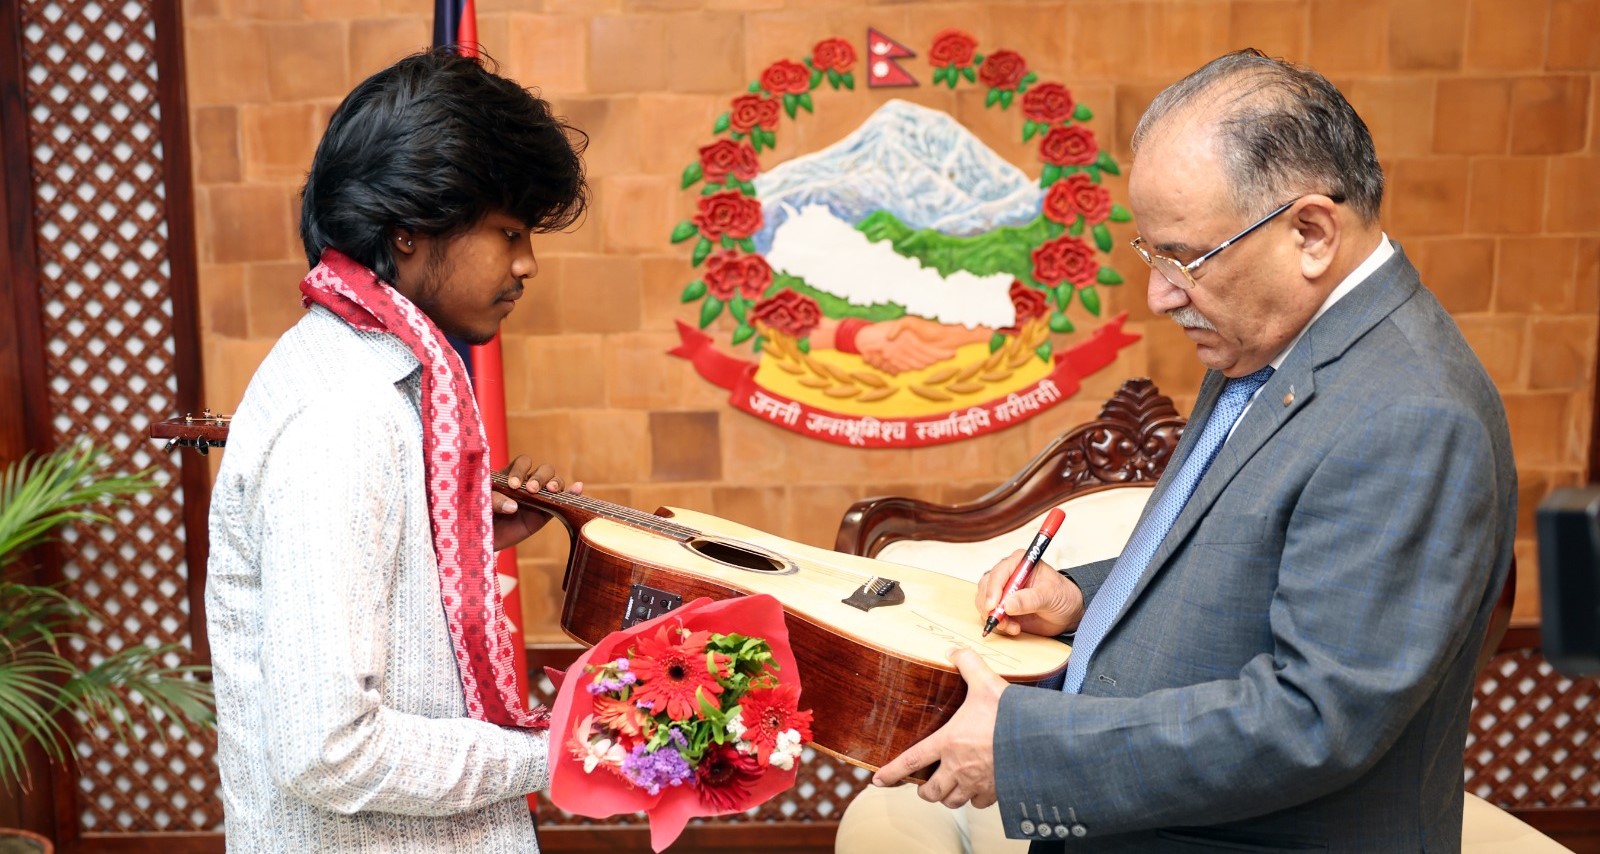 Nepal Idol SO5 winner Karan Pariyar meets PM Prachanda, receives guitar gift (photos)